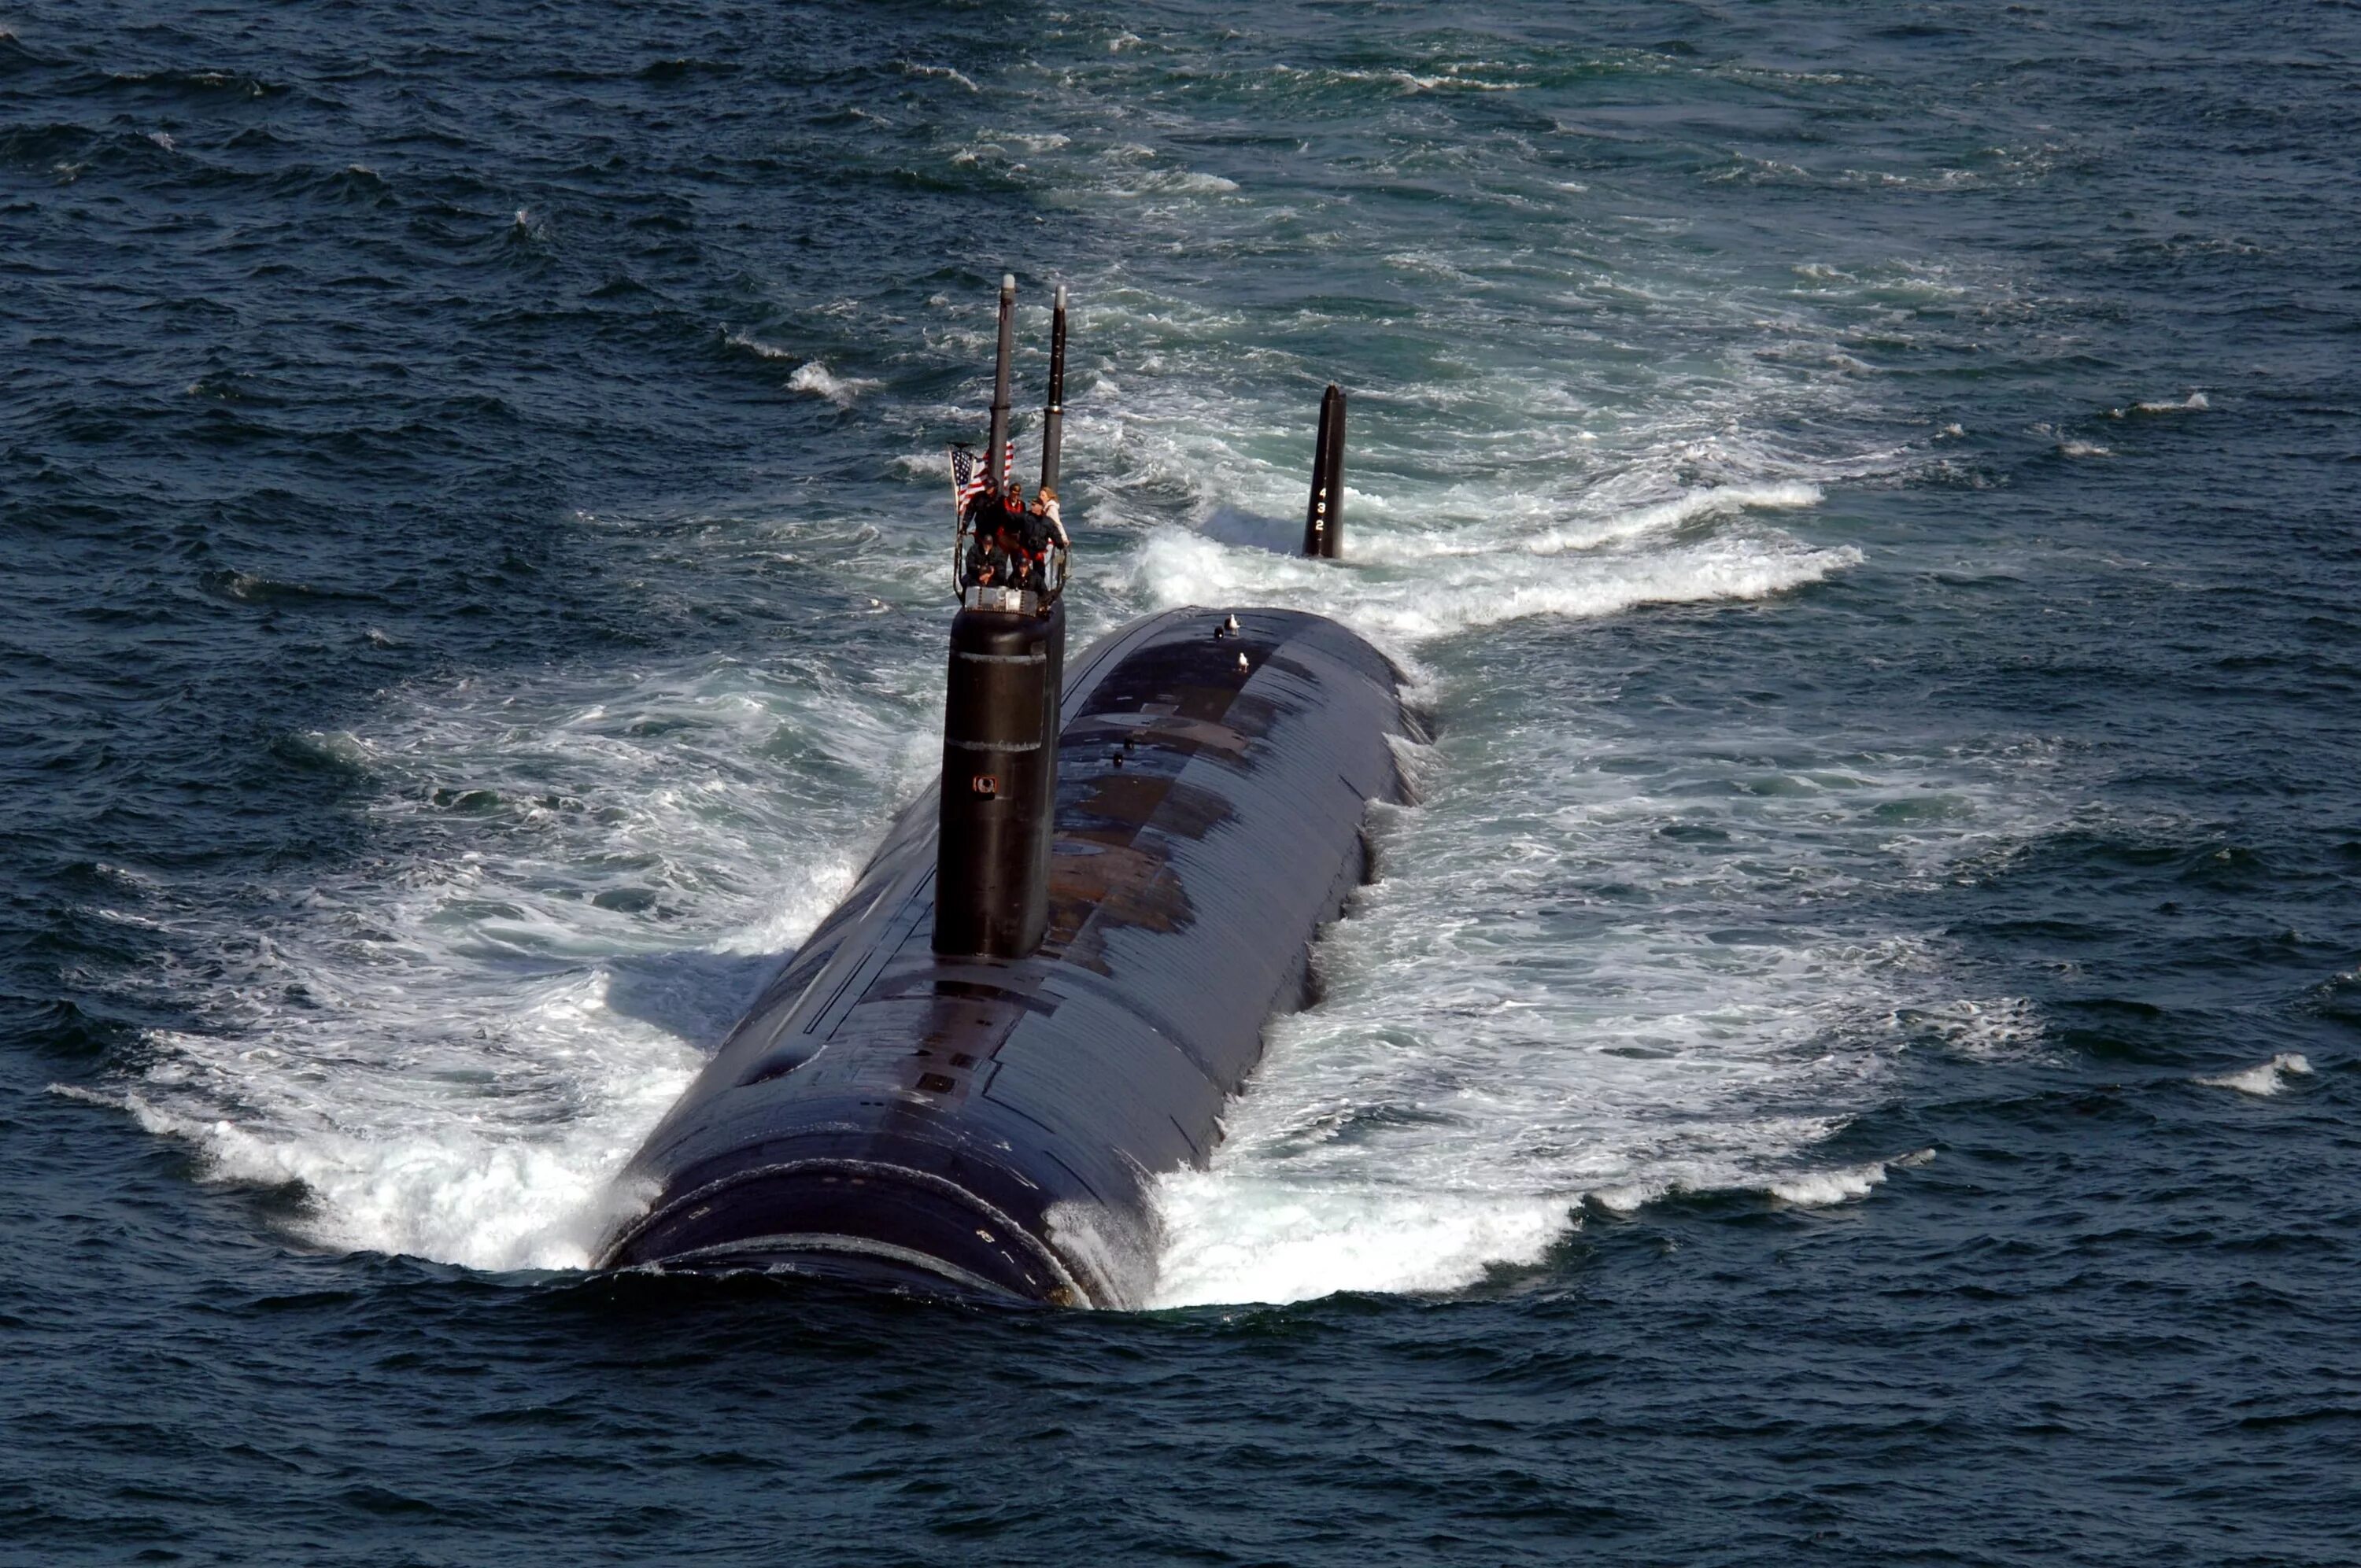 Пл c. Подводная лодка класса Лос Анджелес. USS los Angeles SSN-688. АПЛ Лос Анджелес лодка. Подводная лодка Лос Анджелес ВМС США.